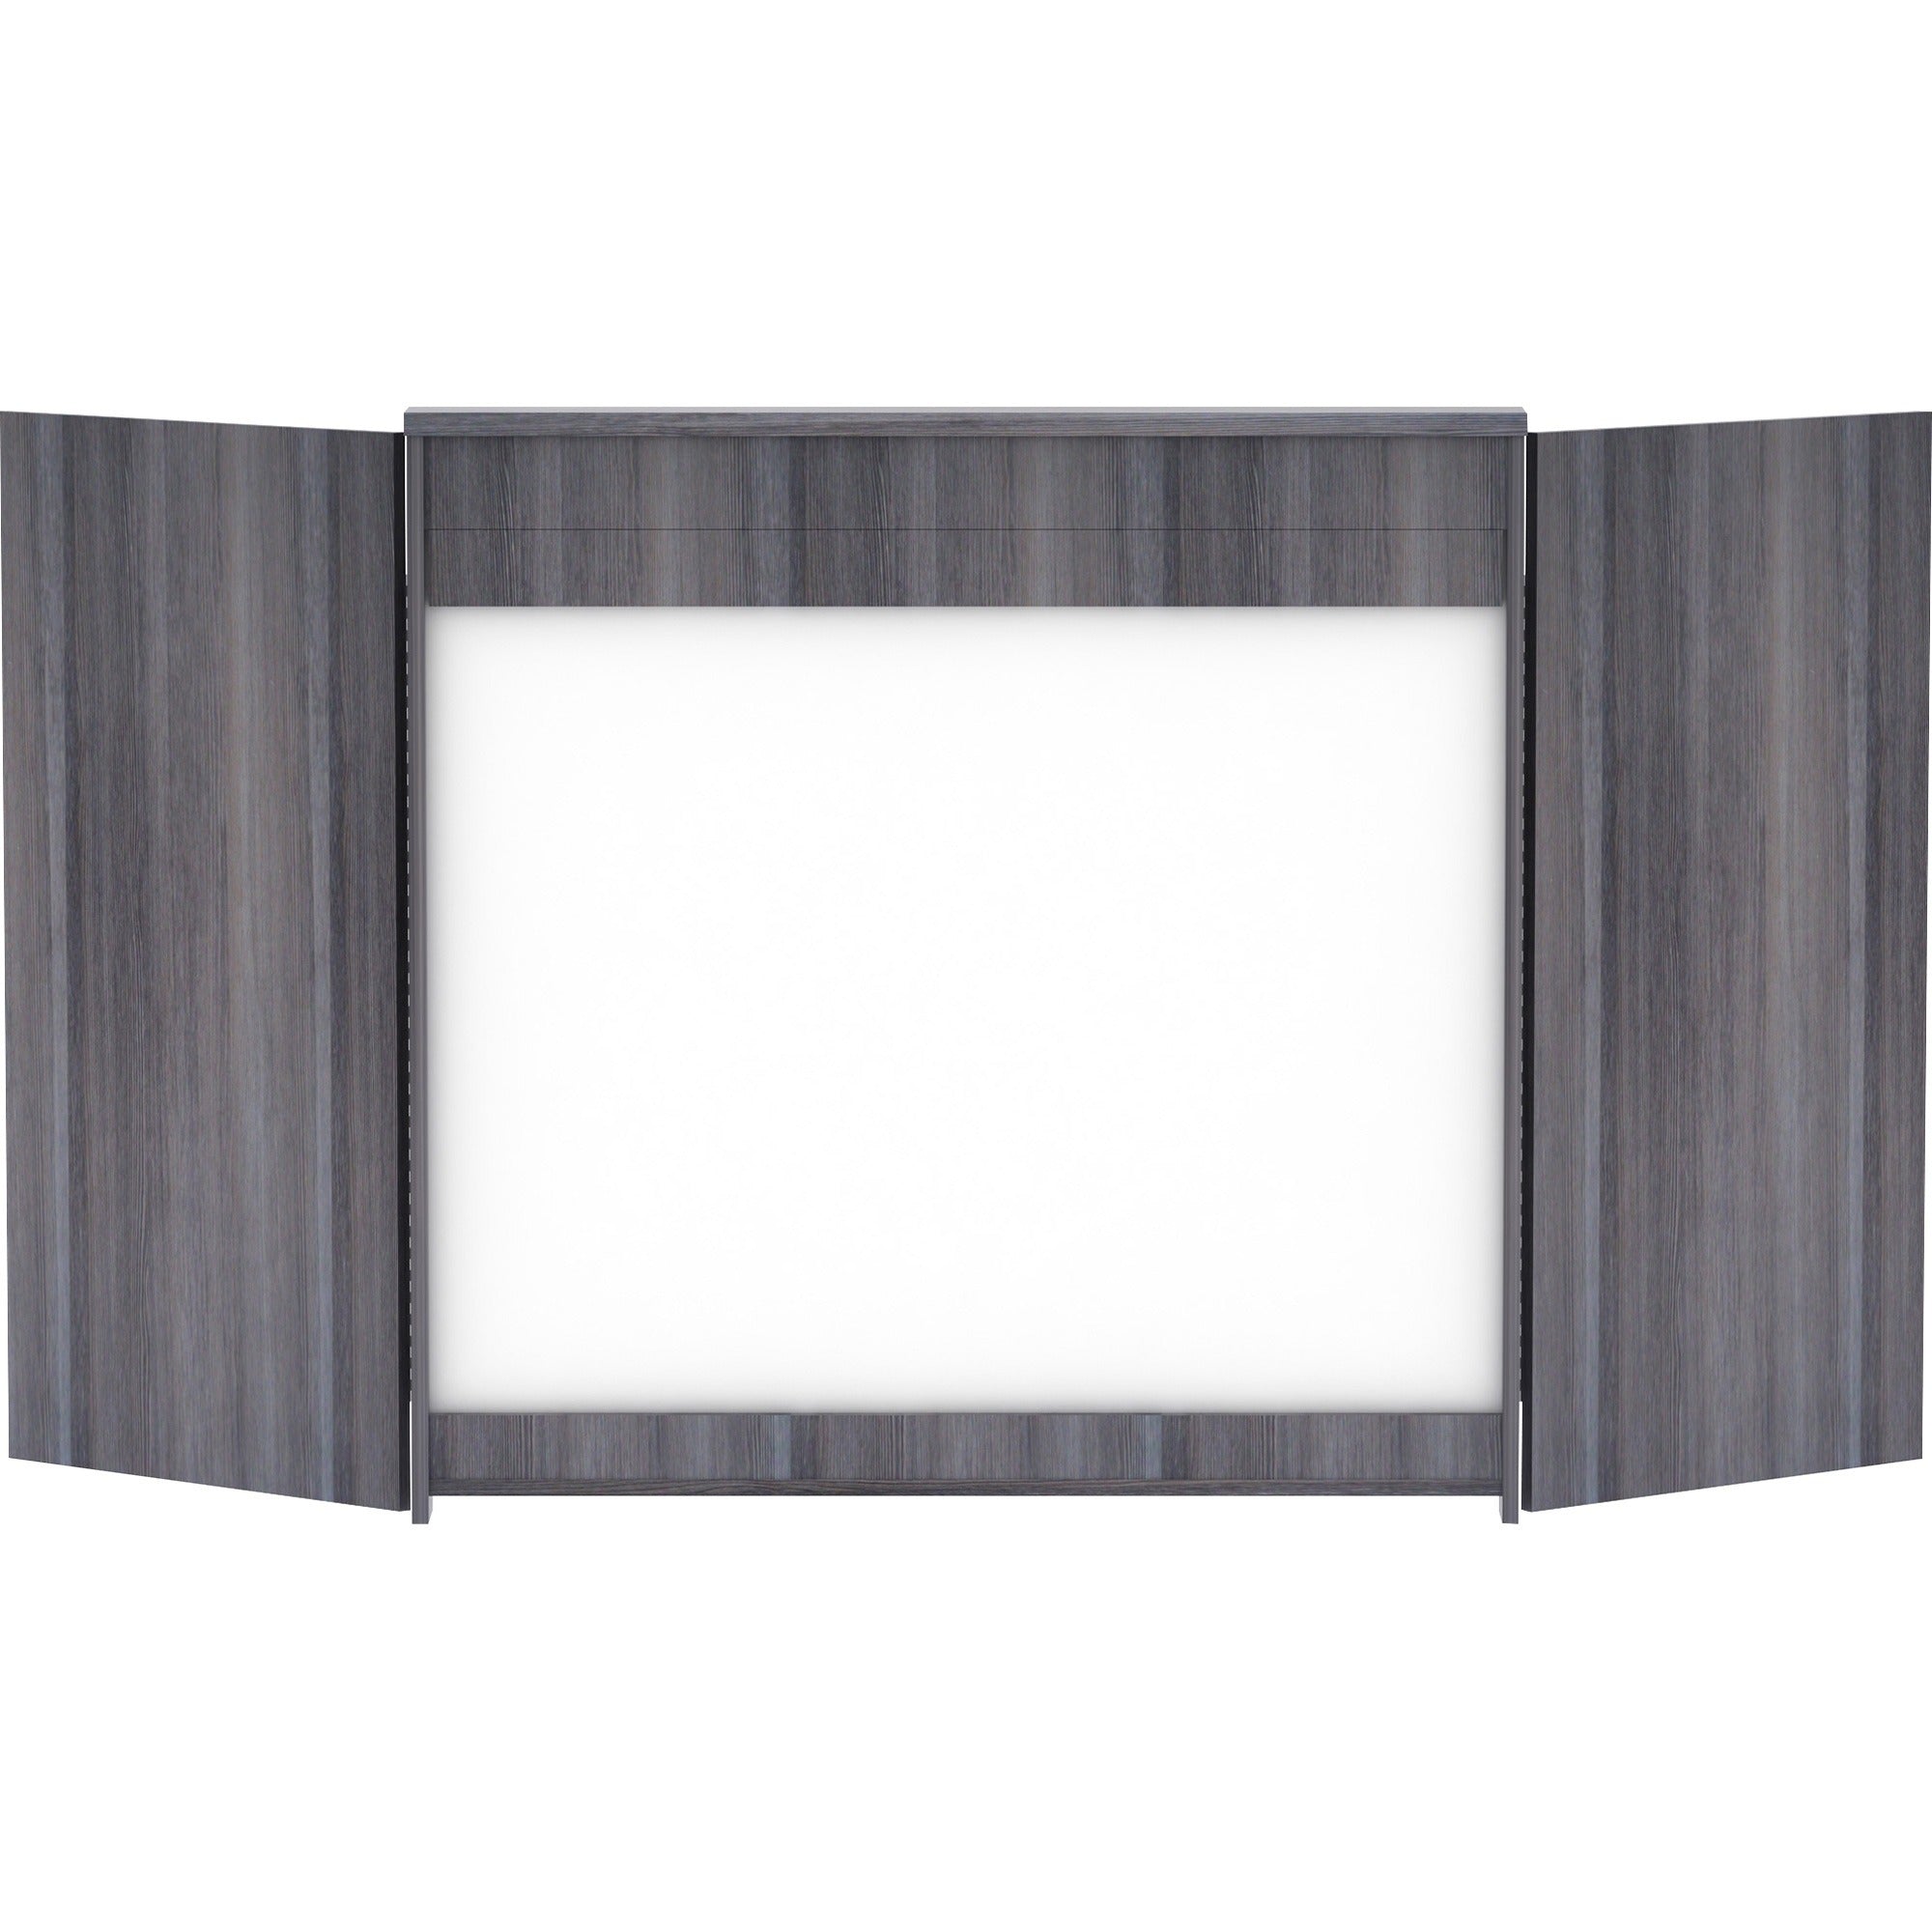 lorell-dry-erase-whiteboard-presentation-cabinet-hinged-door-dry-erase-surface-1-each-473-x-473-x-48_llr69625 - 4